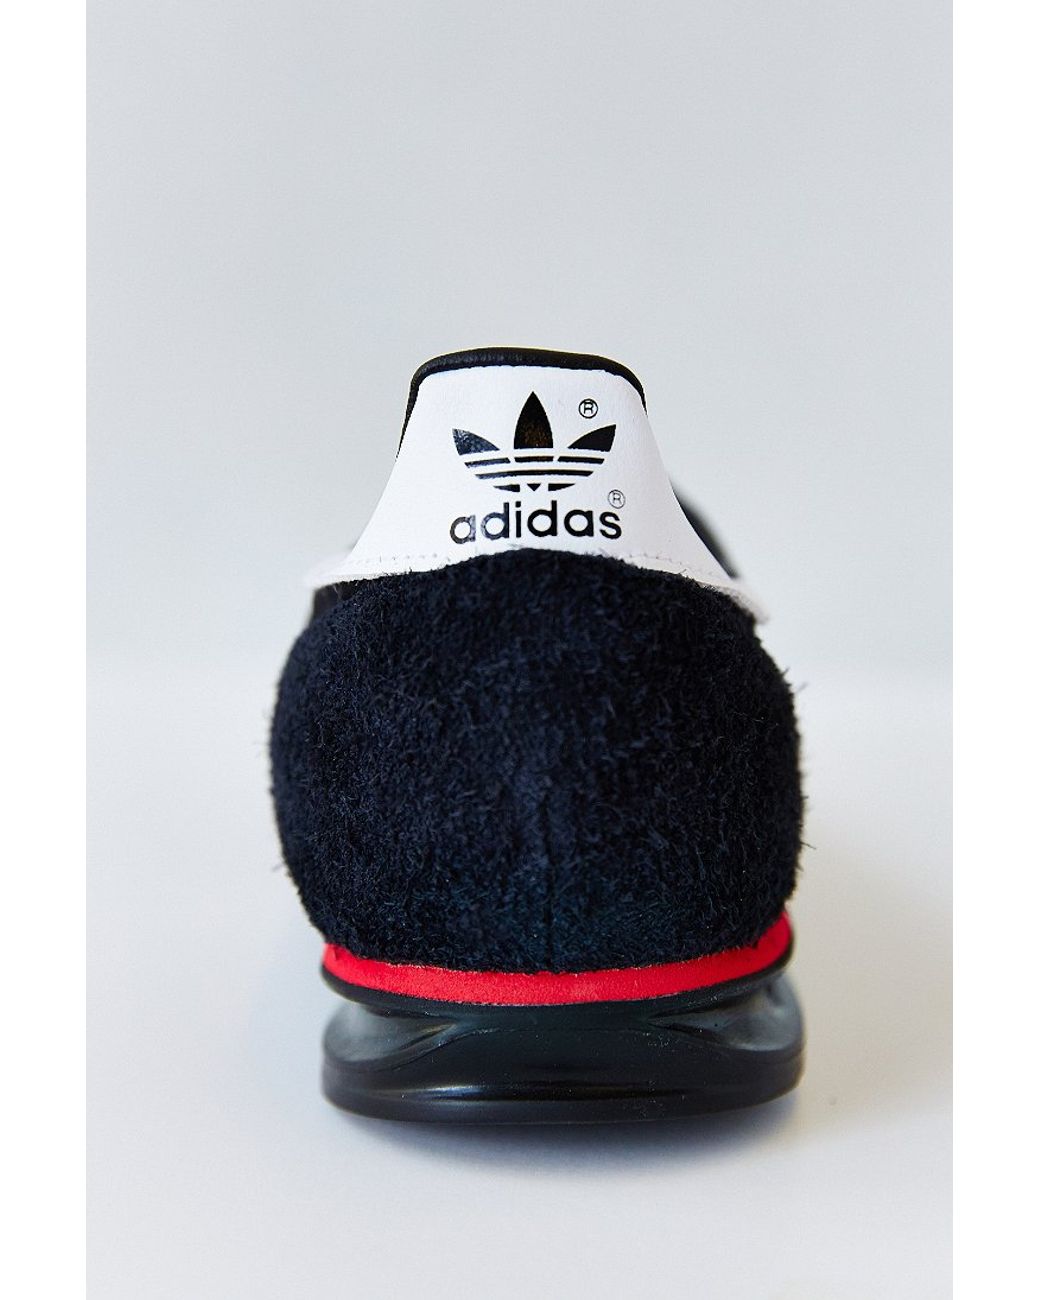 adidas Originals Sl 72 Old-School Sneaker in Black for Men | Lyst